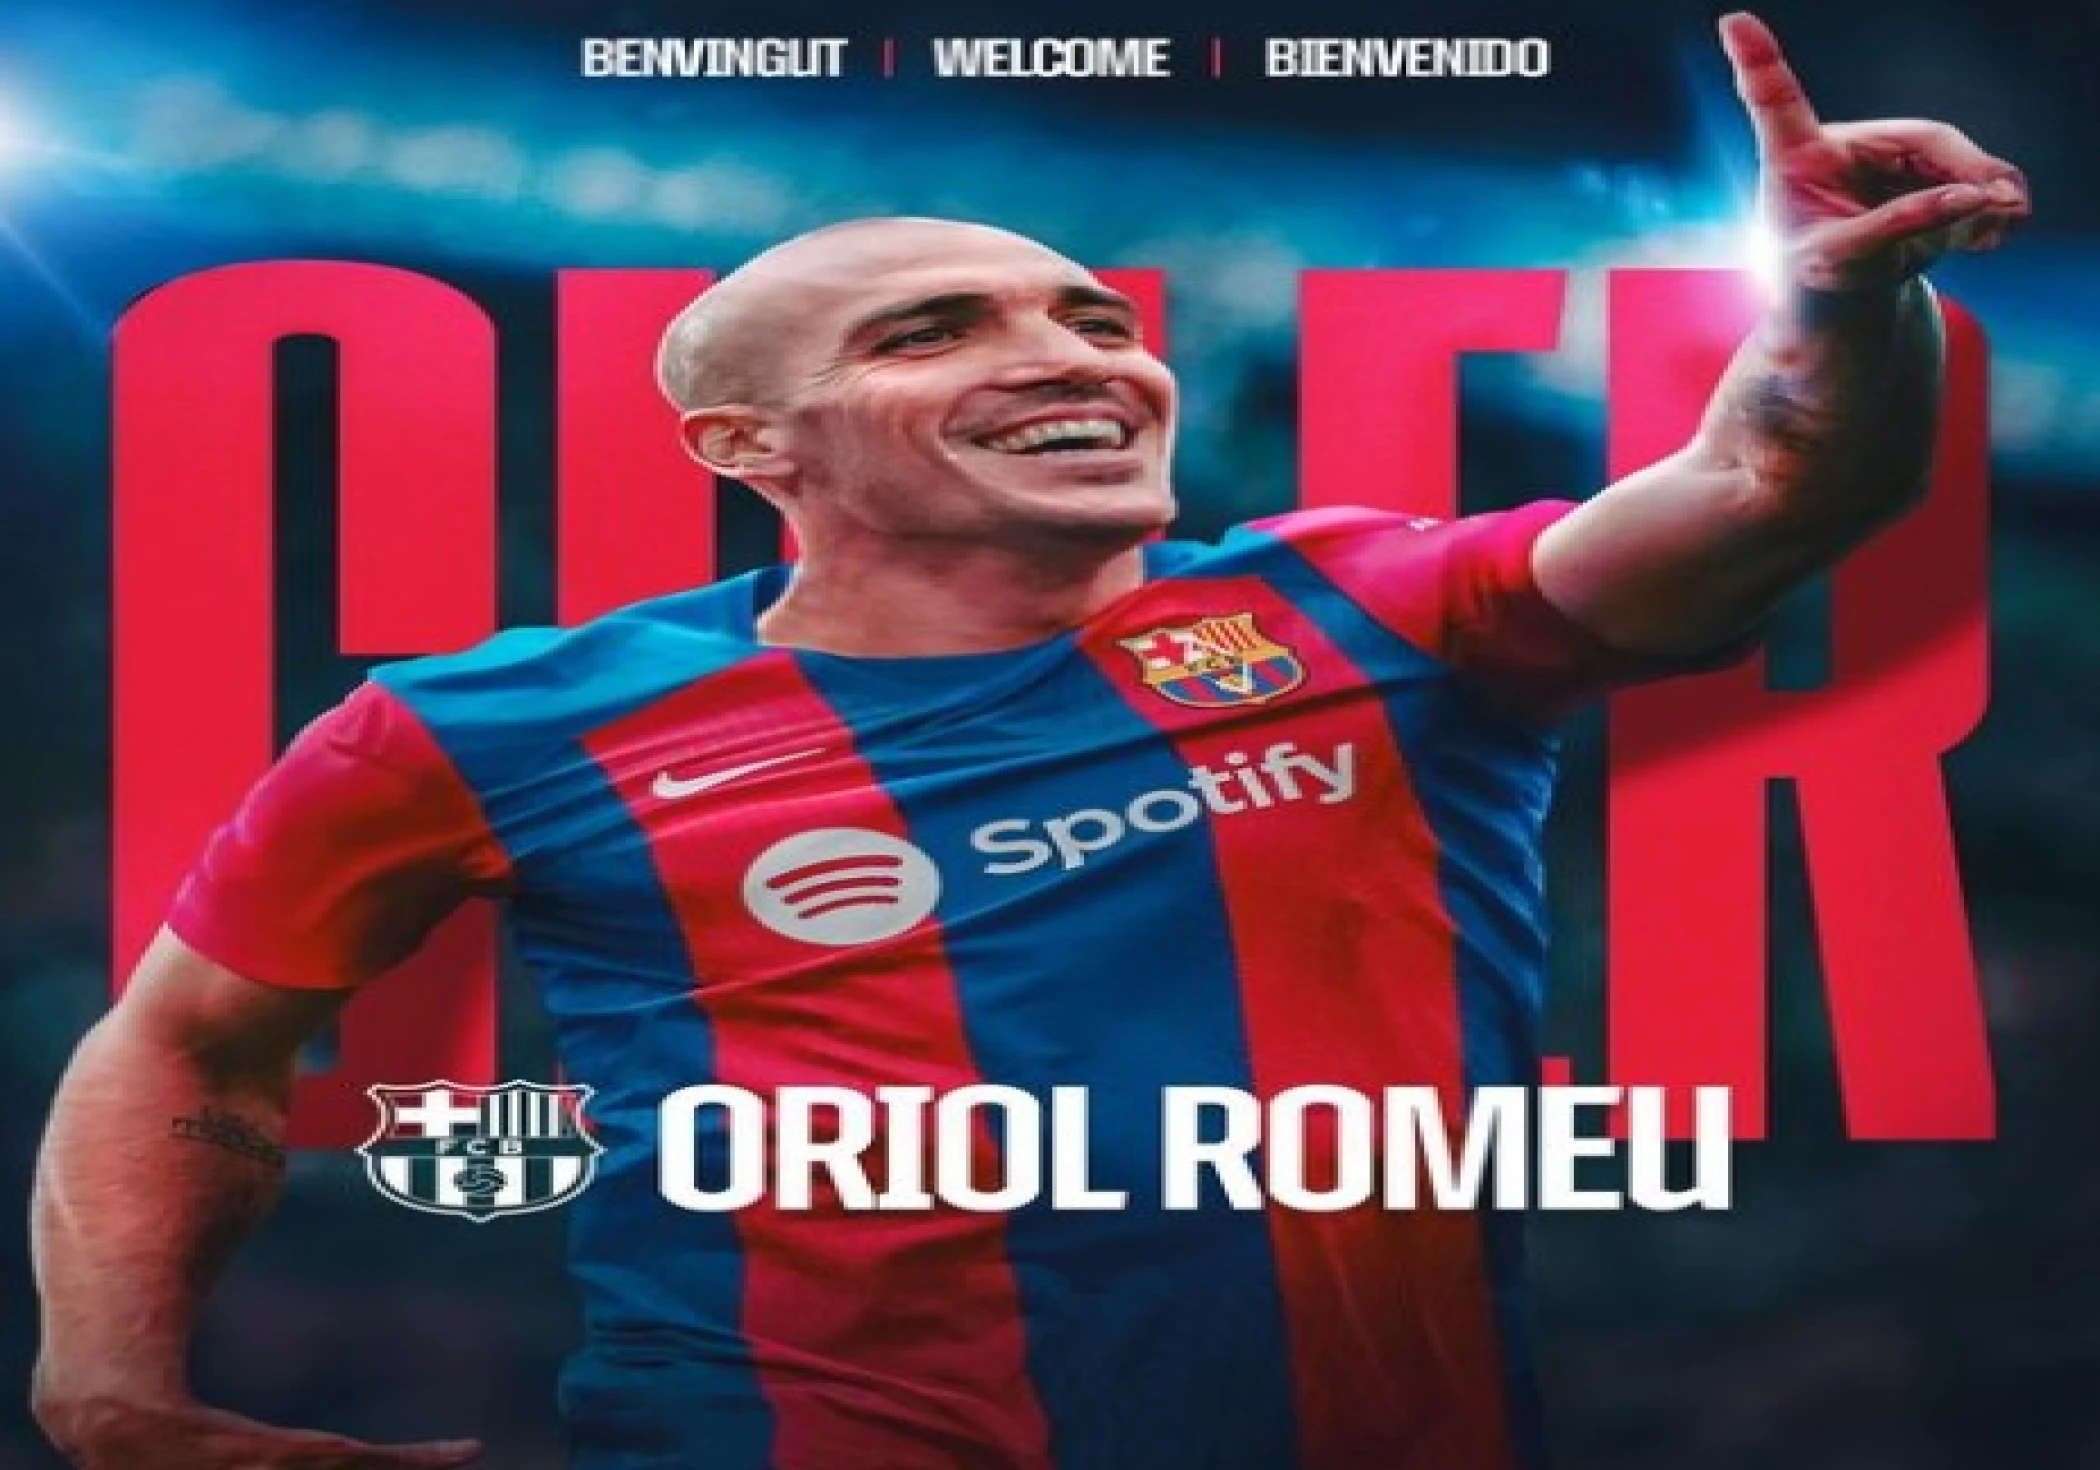 Oriol Romeu back to Barcelona Football Club